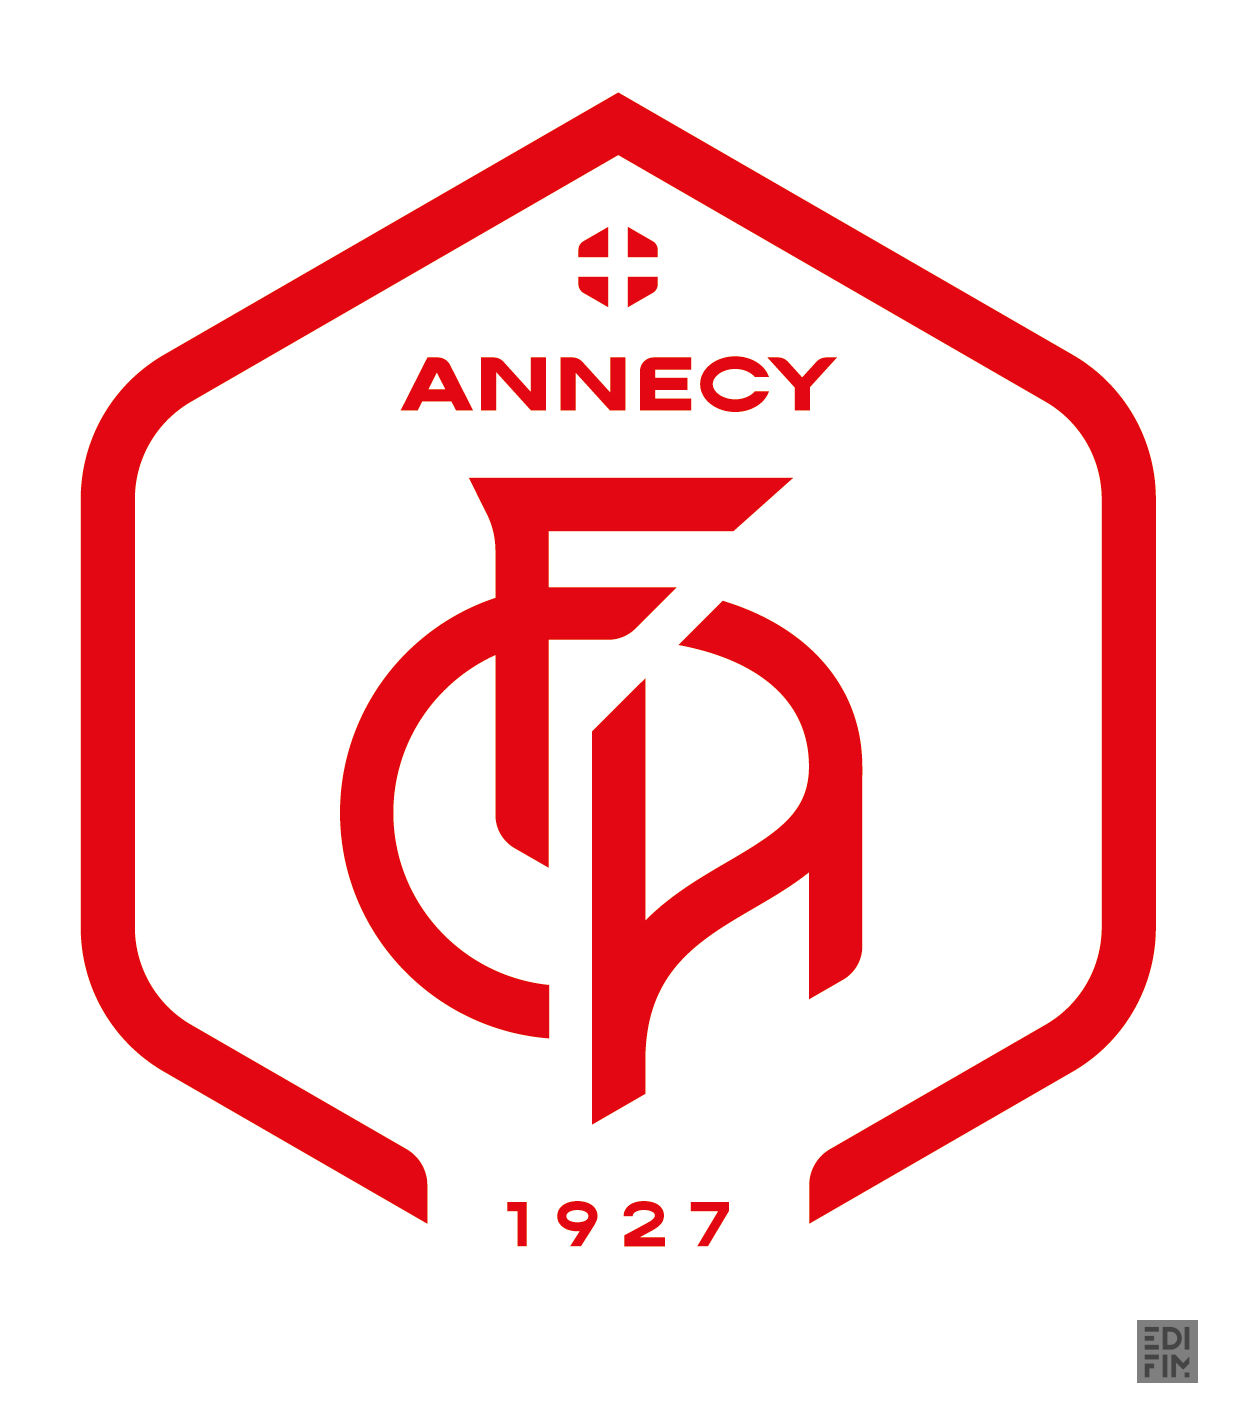 FC ANNECY x EDIFIM